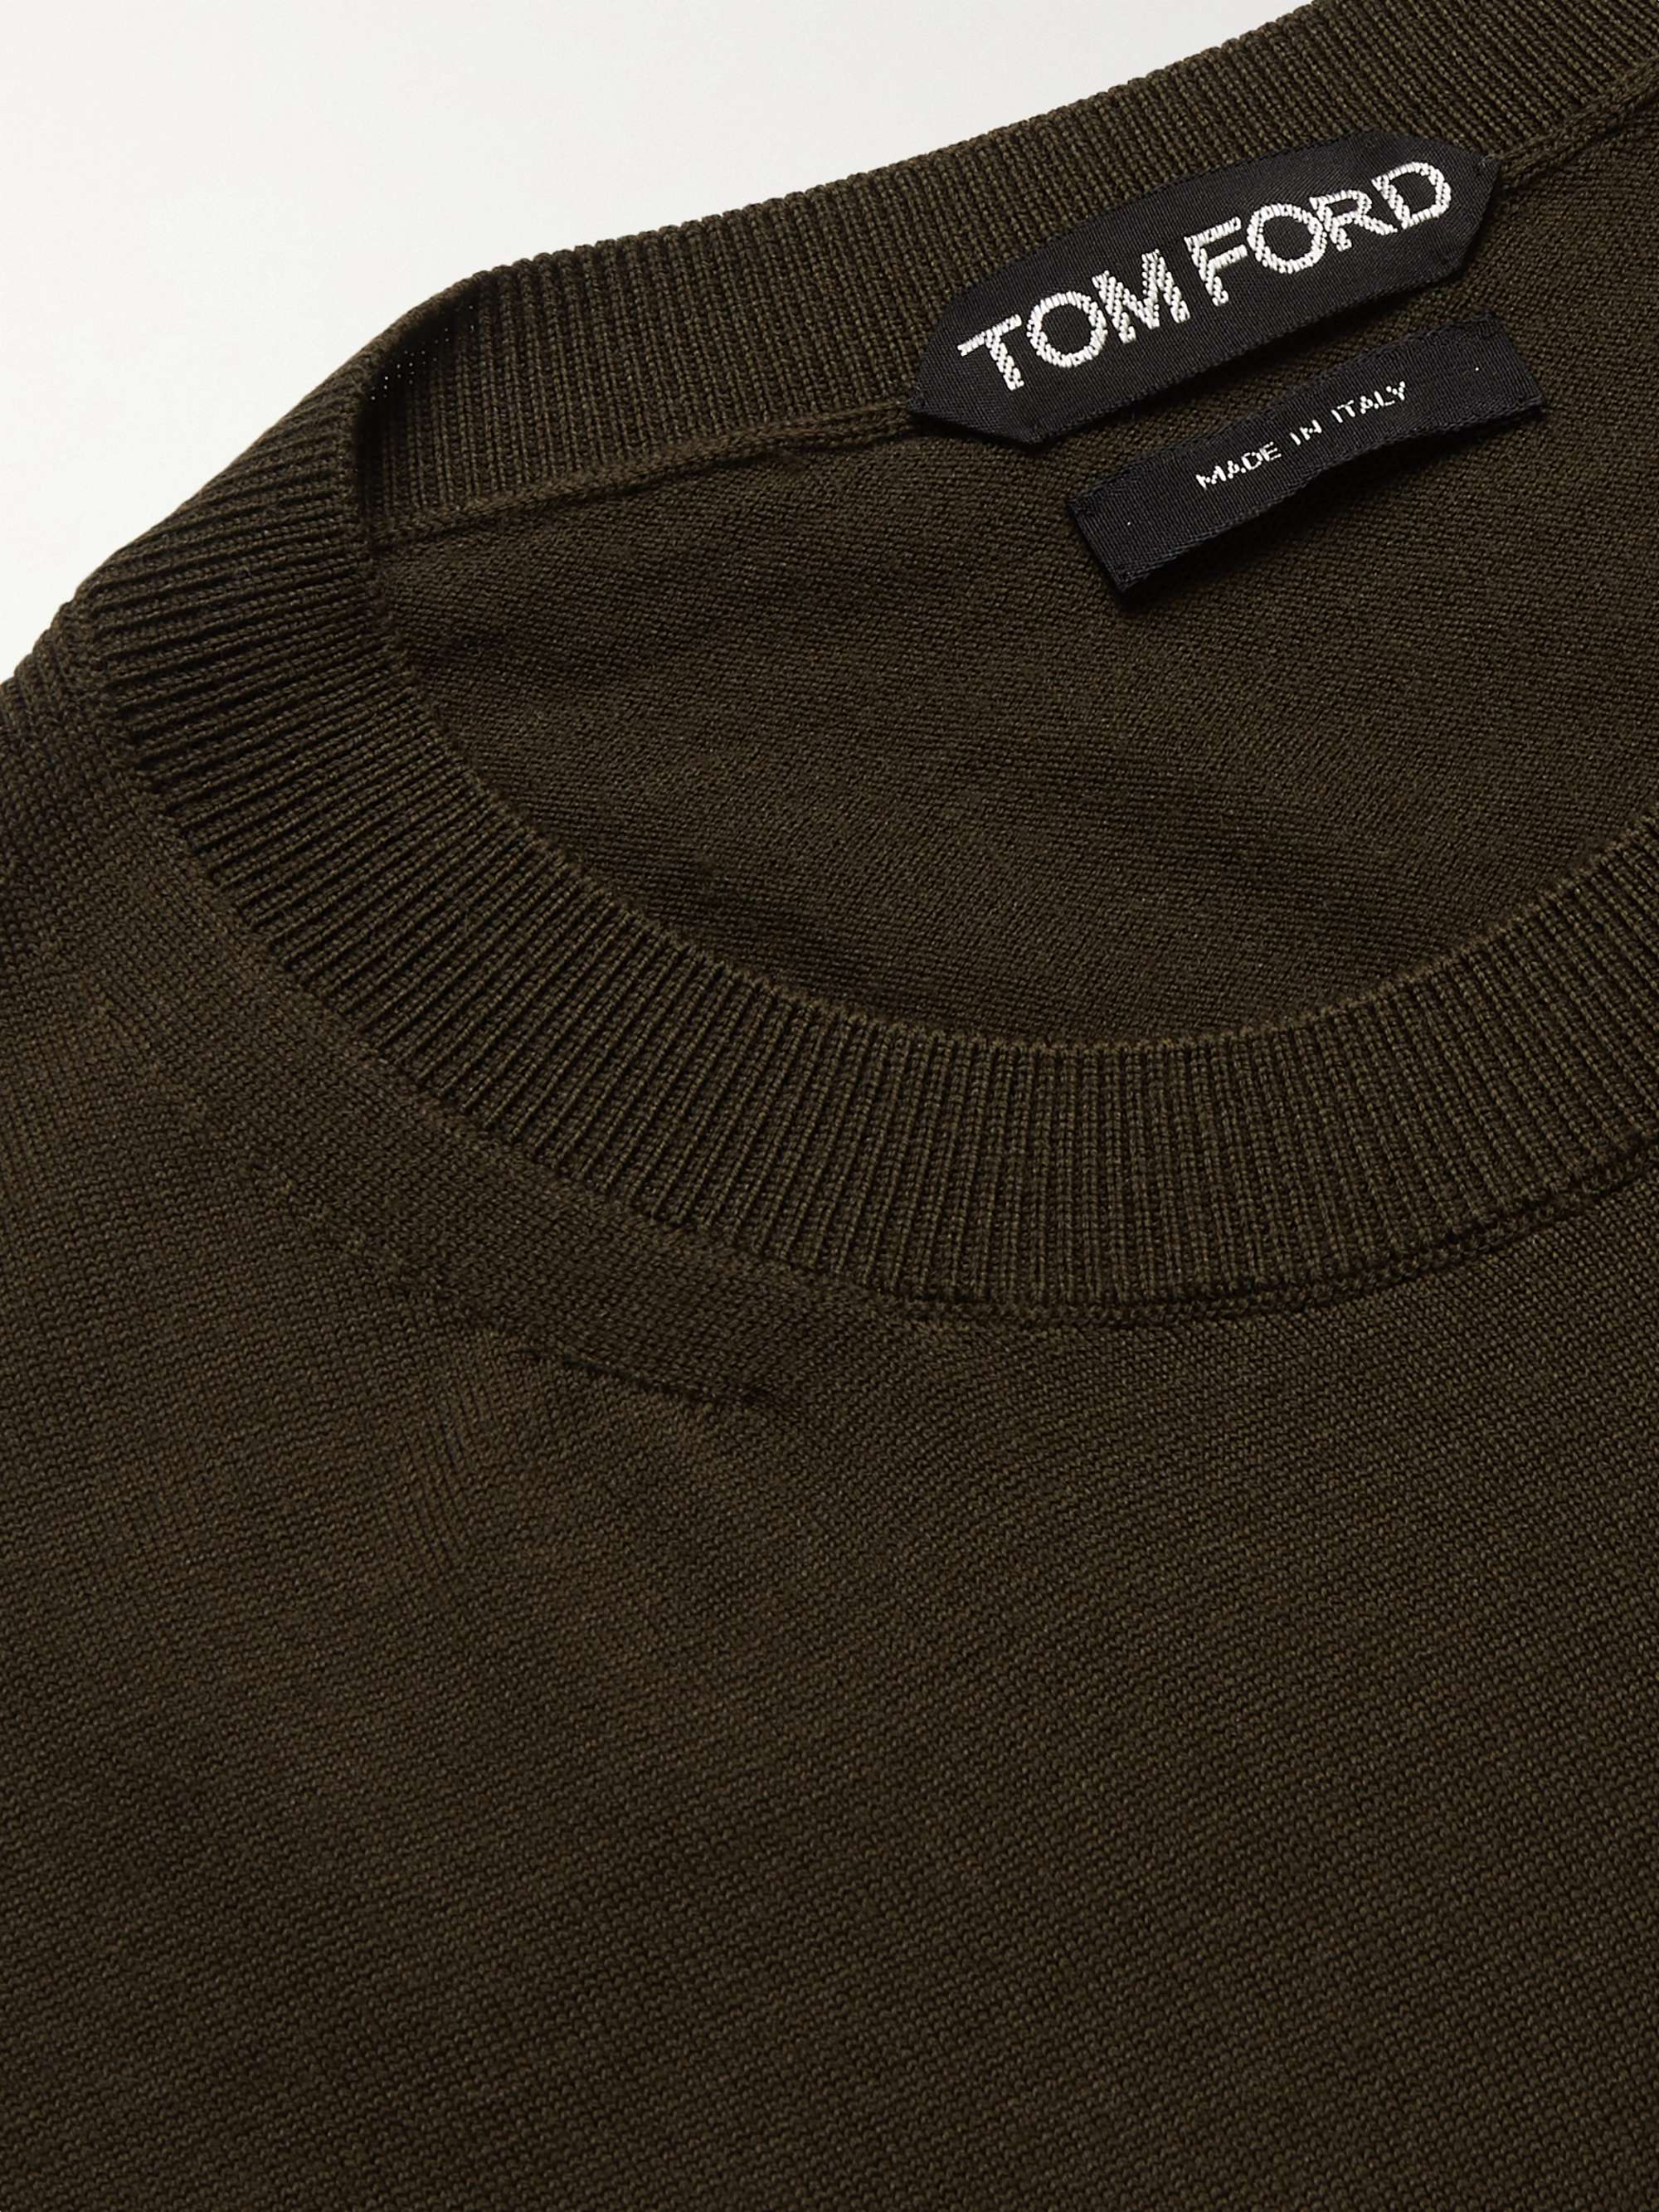 TOM FORD Slim-Fit Wool Sweater